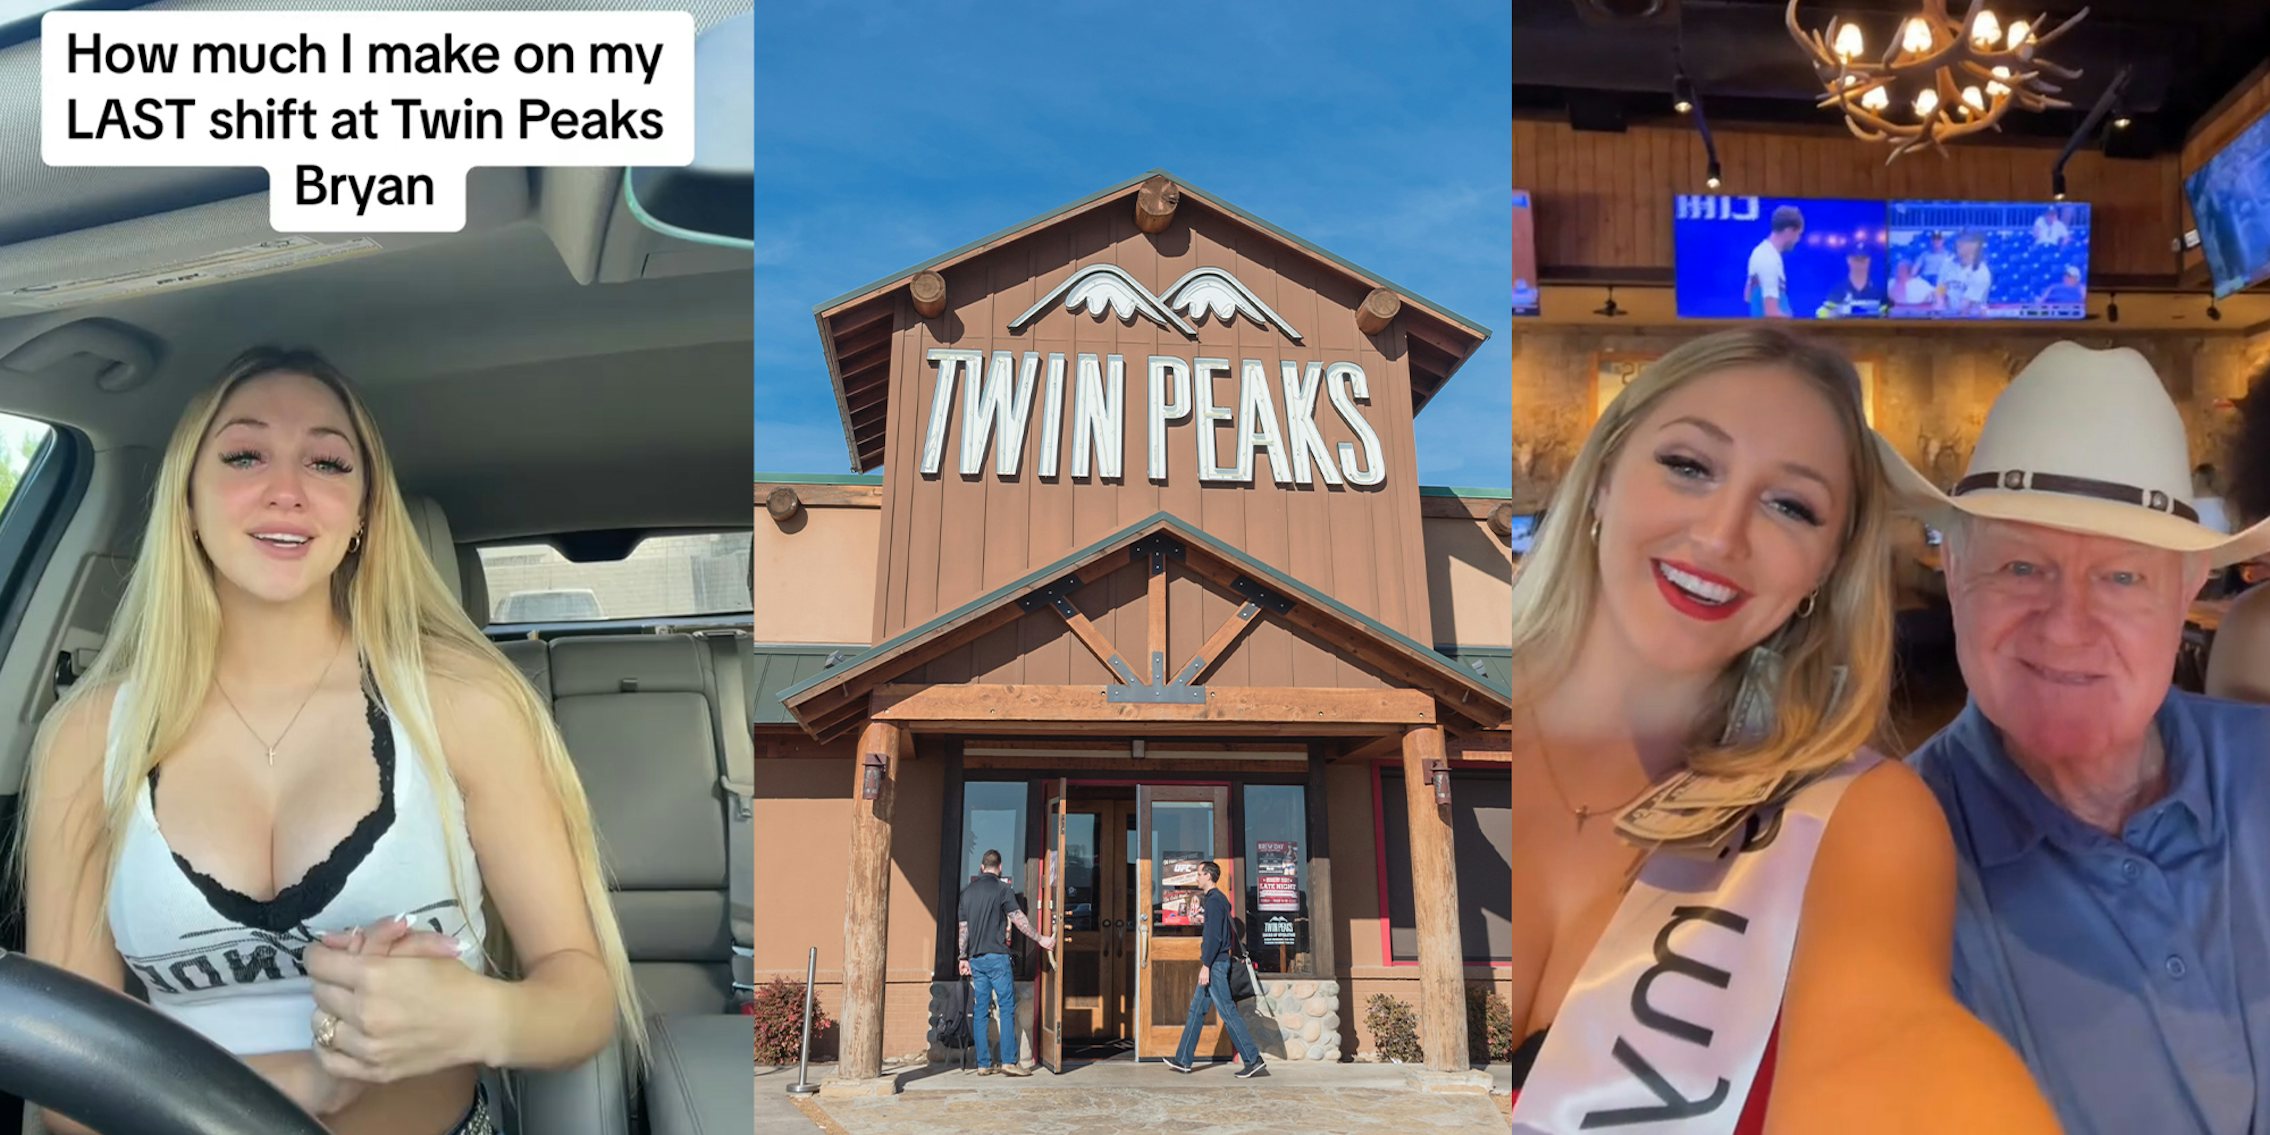 Twin Peaks server inside of her car; Twin Peaks Restaurant Front; Twin Peaks Server with Older Man In restaurant